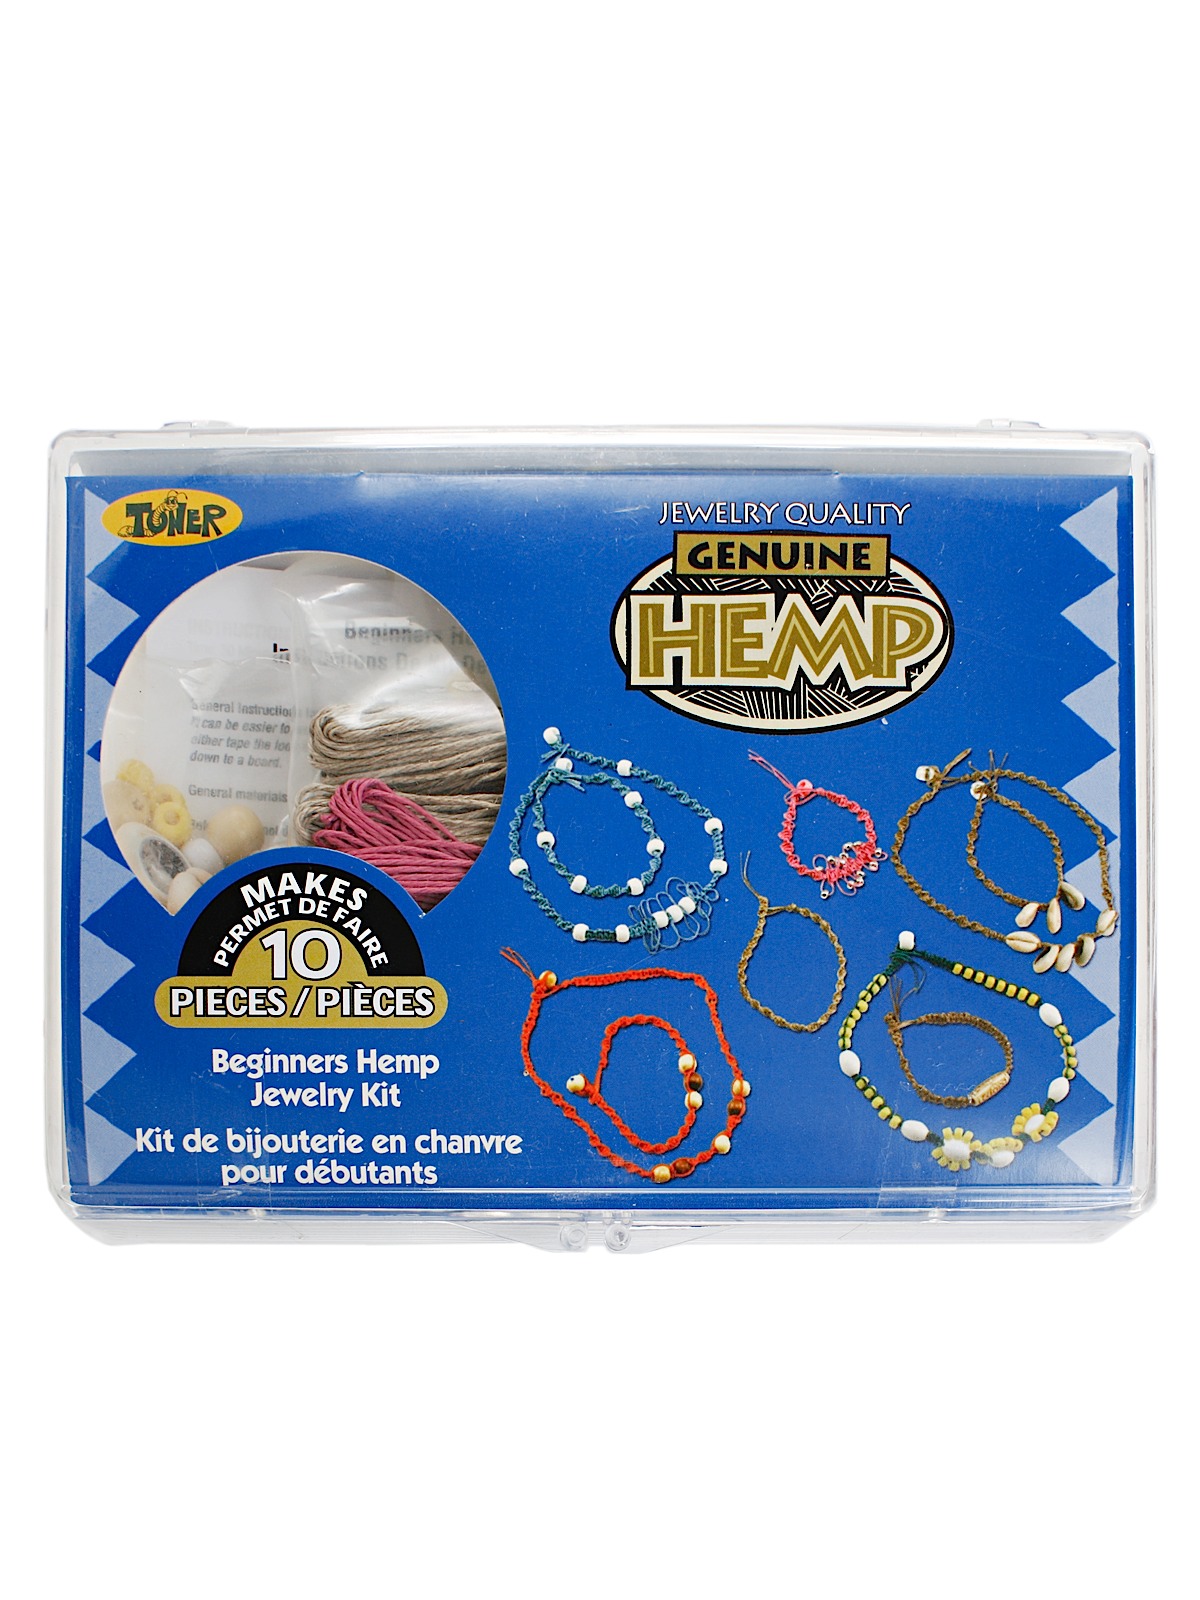 Beginners Hemp Kit Kit